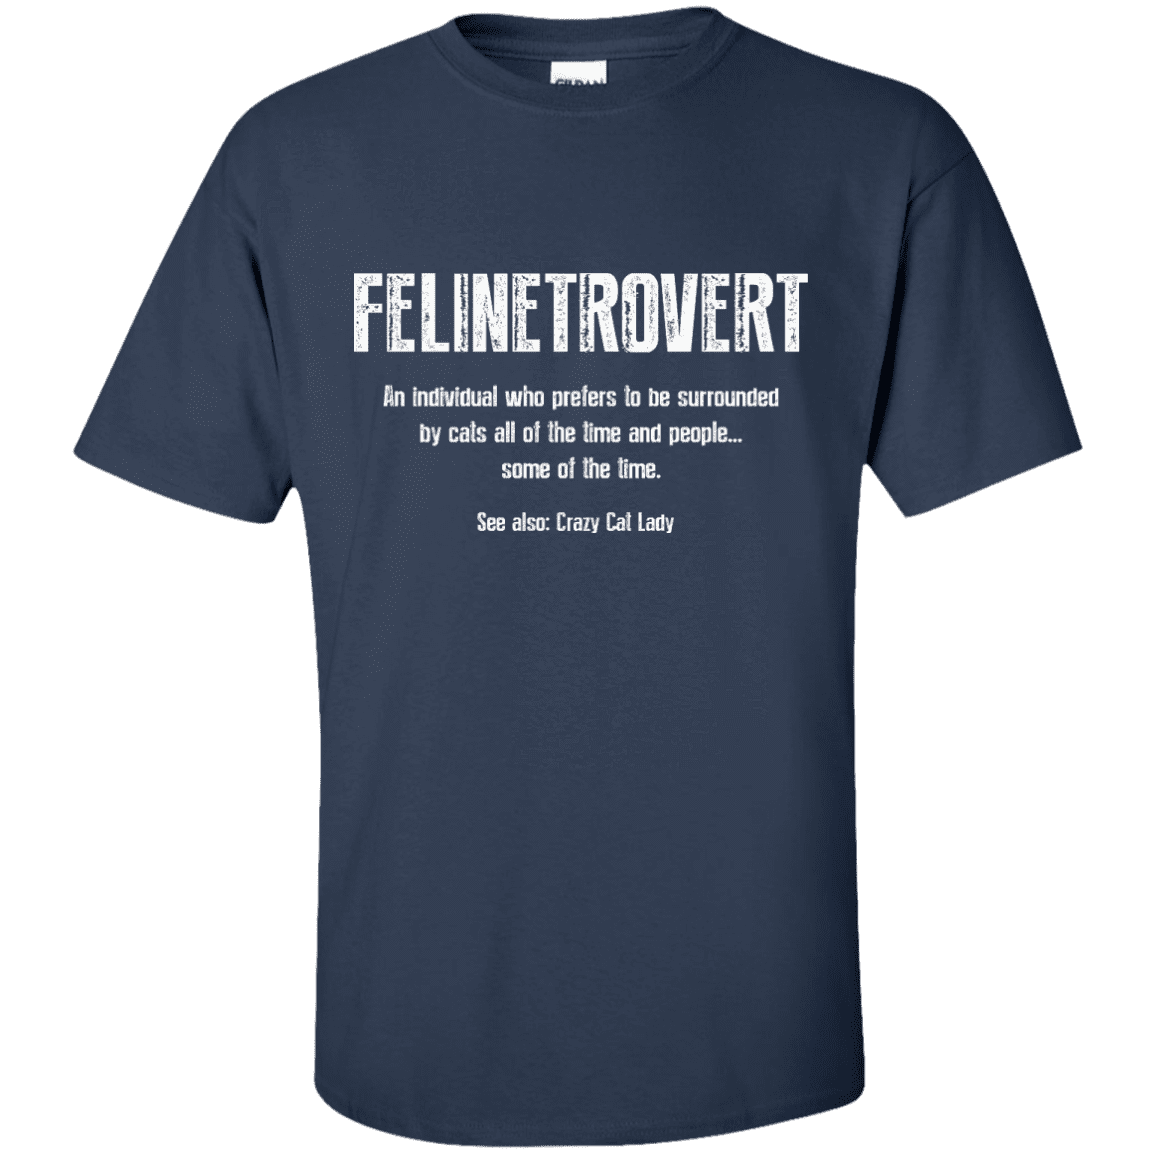 Felinetrovert - T Shirt.